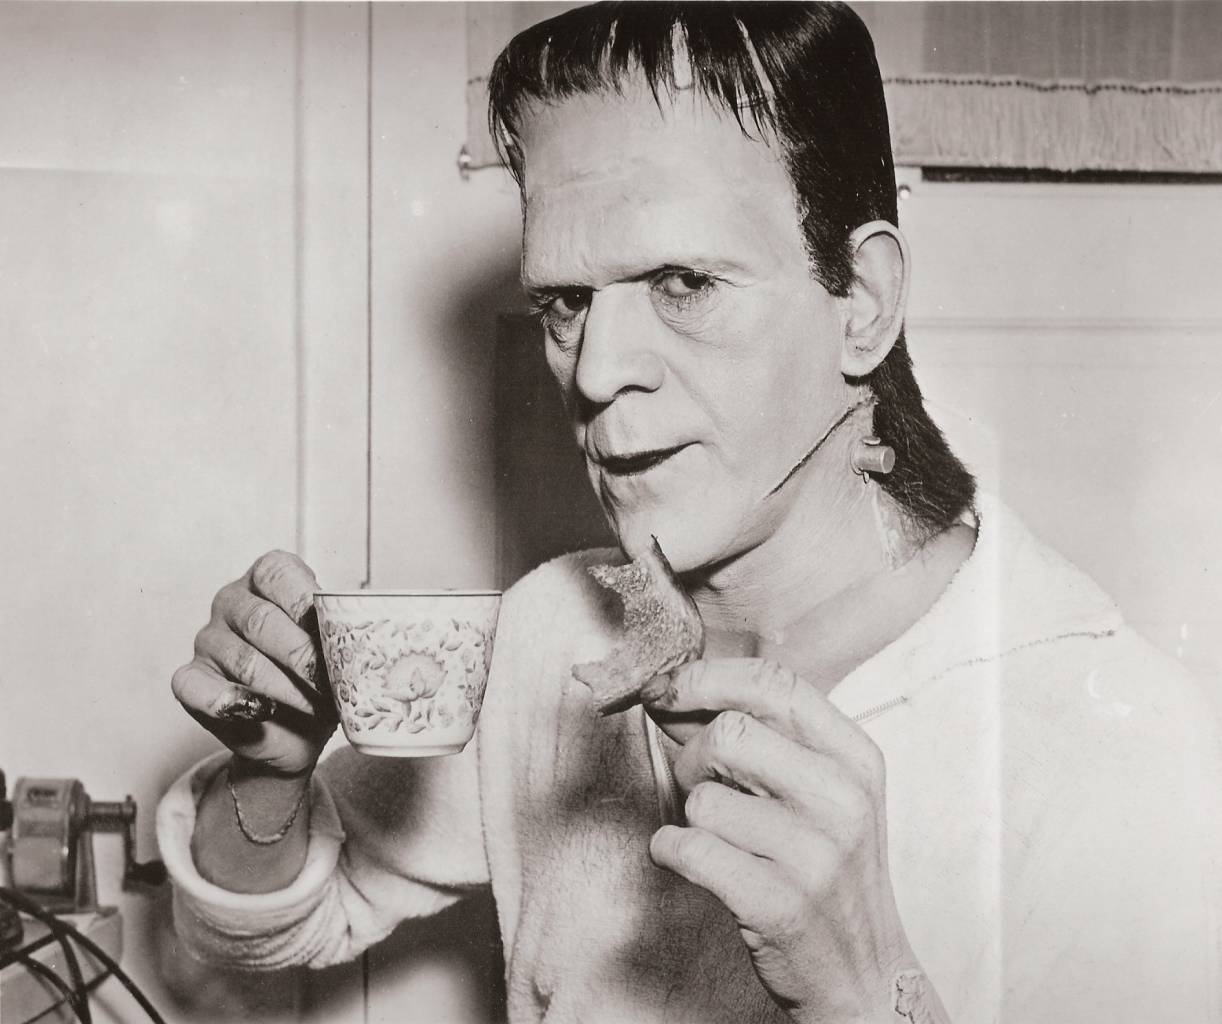 Boris Karloff having a nice cup of tea and a piece of toast between shots of Frankenstein, released in 1931.